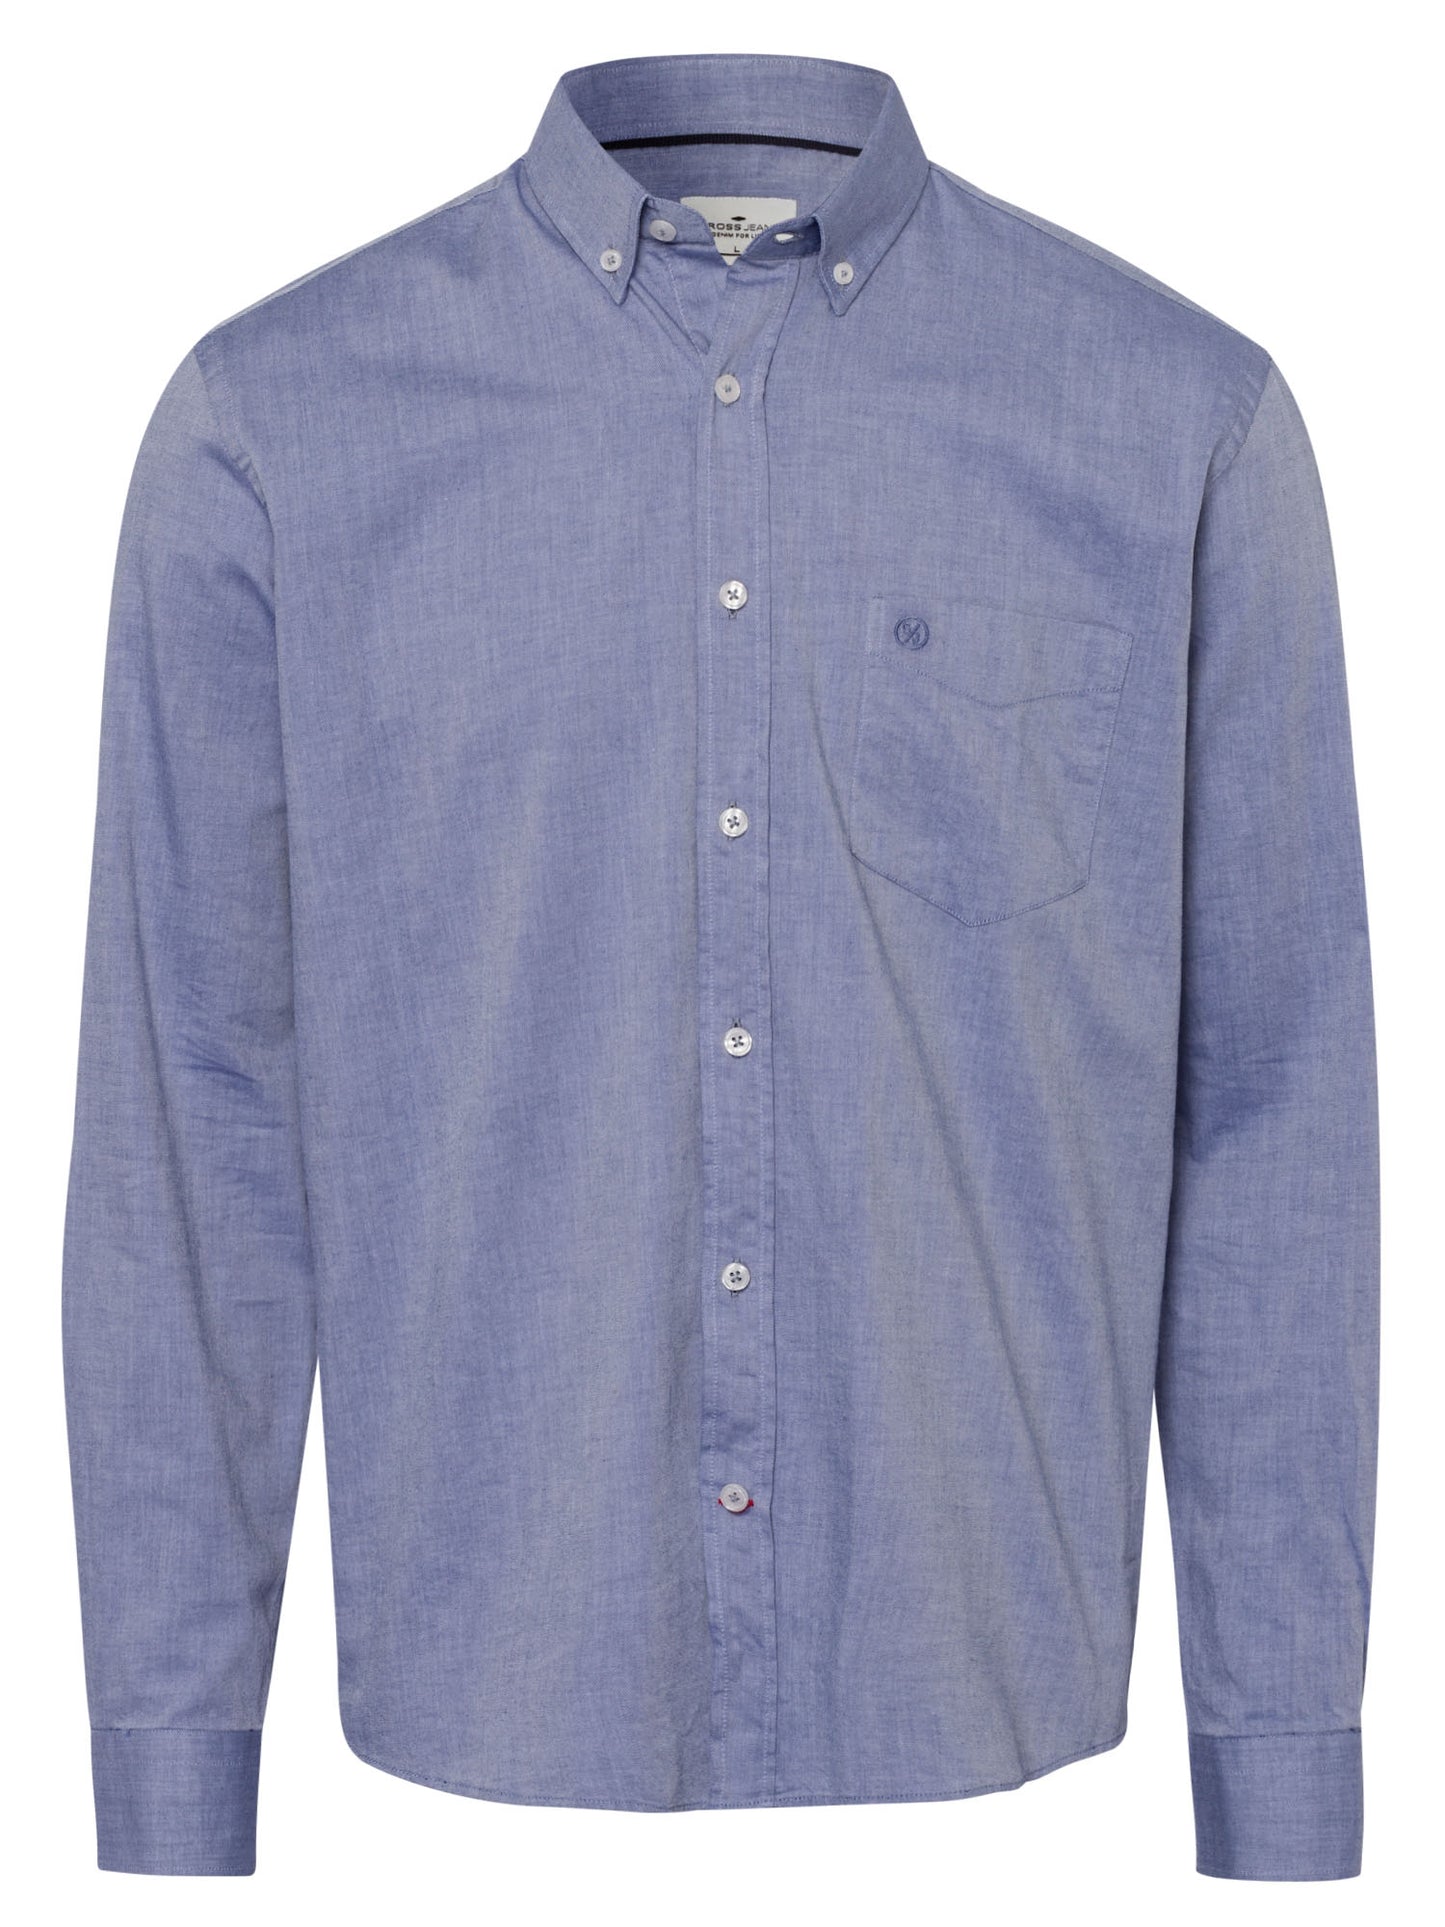 Men's regular long-sleeved shirt with breast pocket, blue.